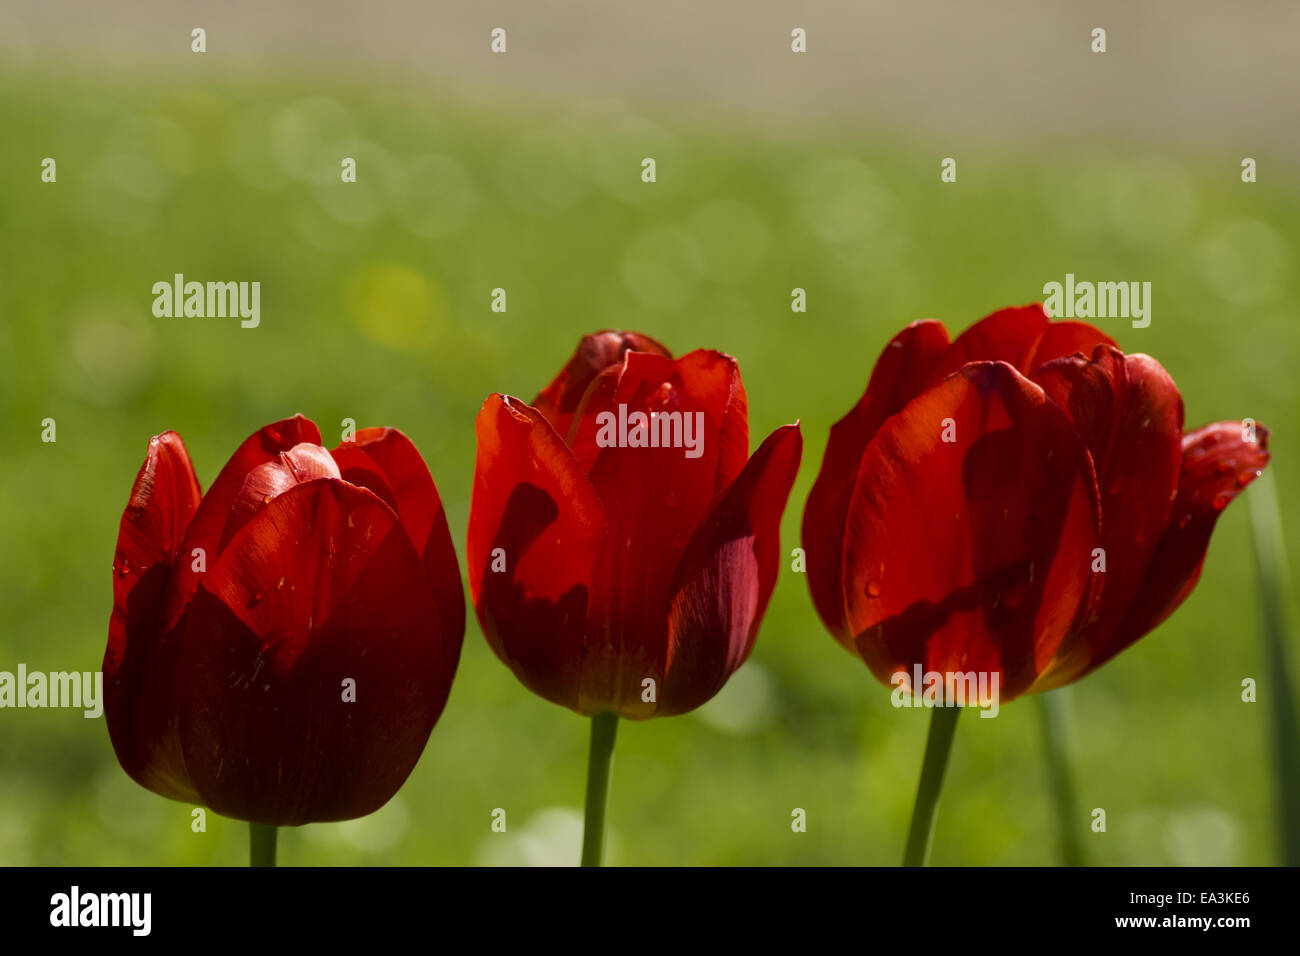 3 red tulips Stock Photo